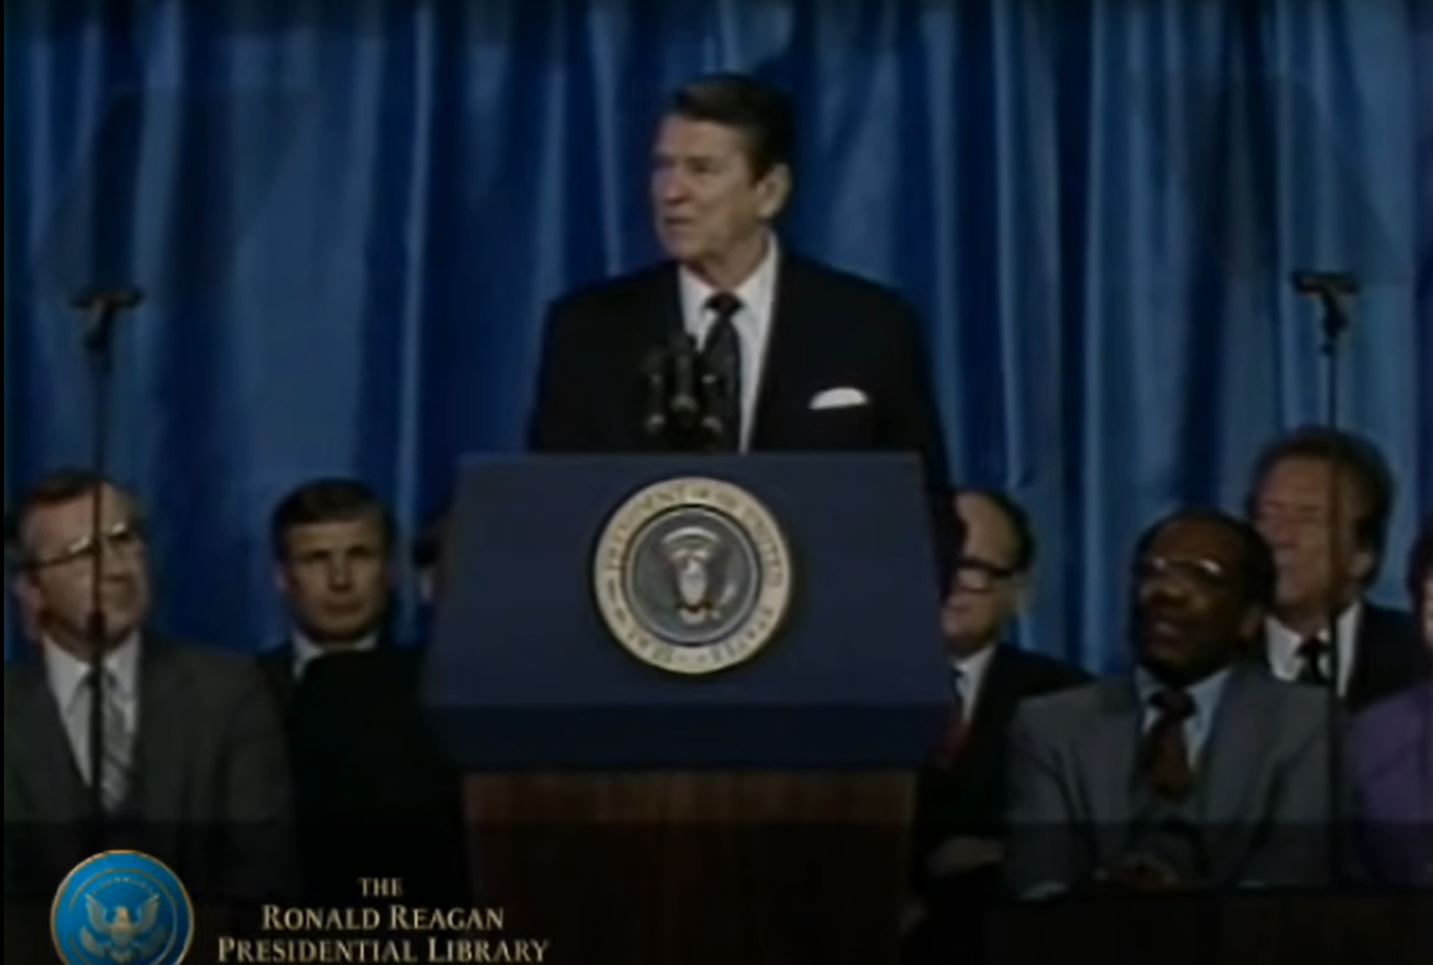 President Reagan delivers the "Evil Empire" speech in Orlando on March 8, 1983.